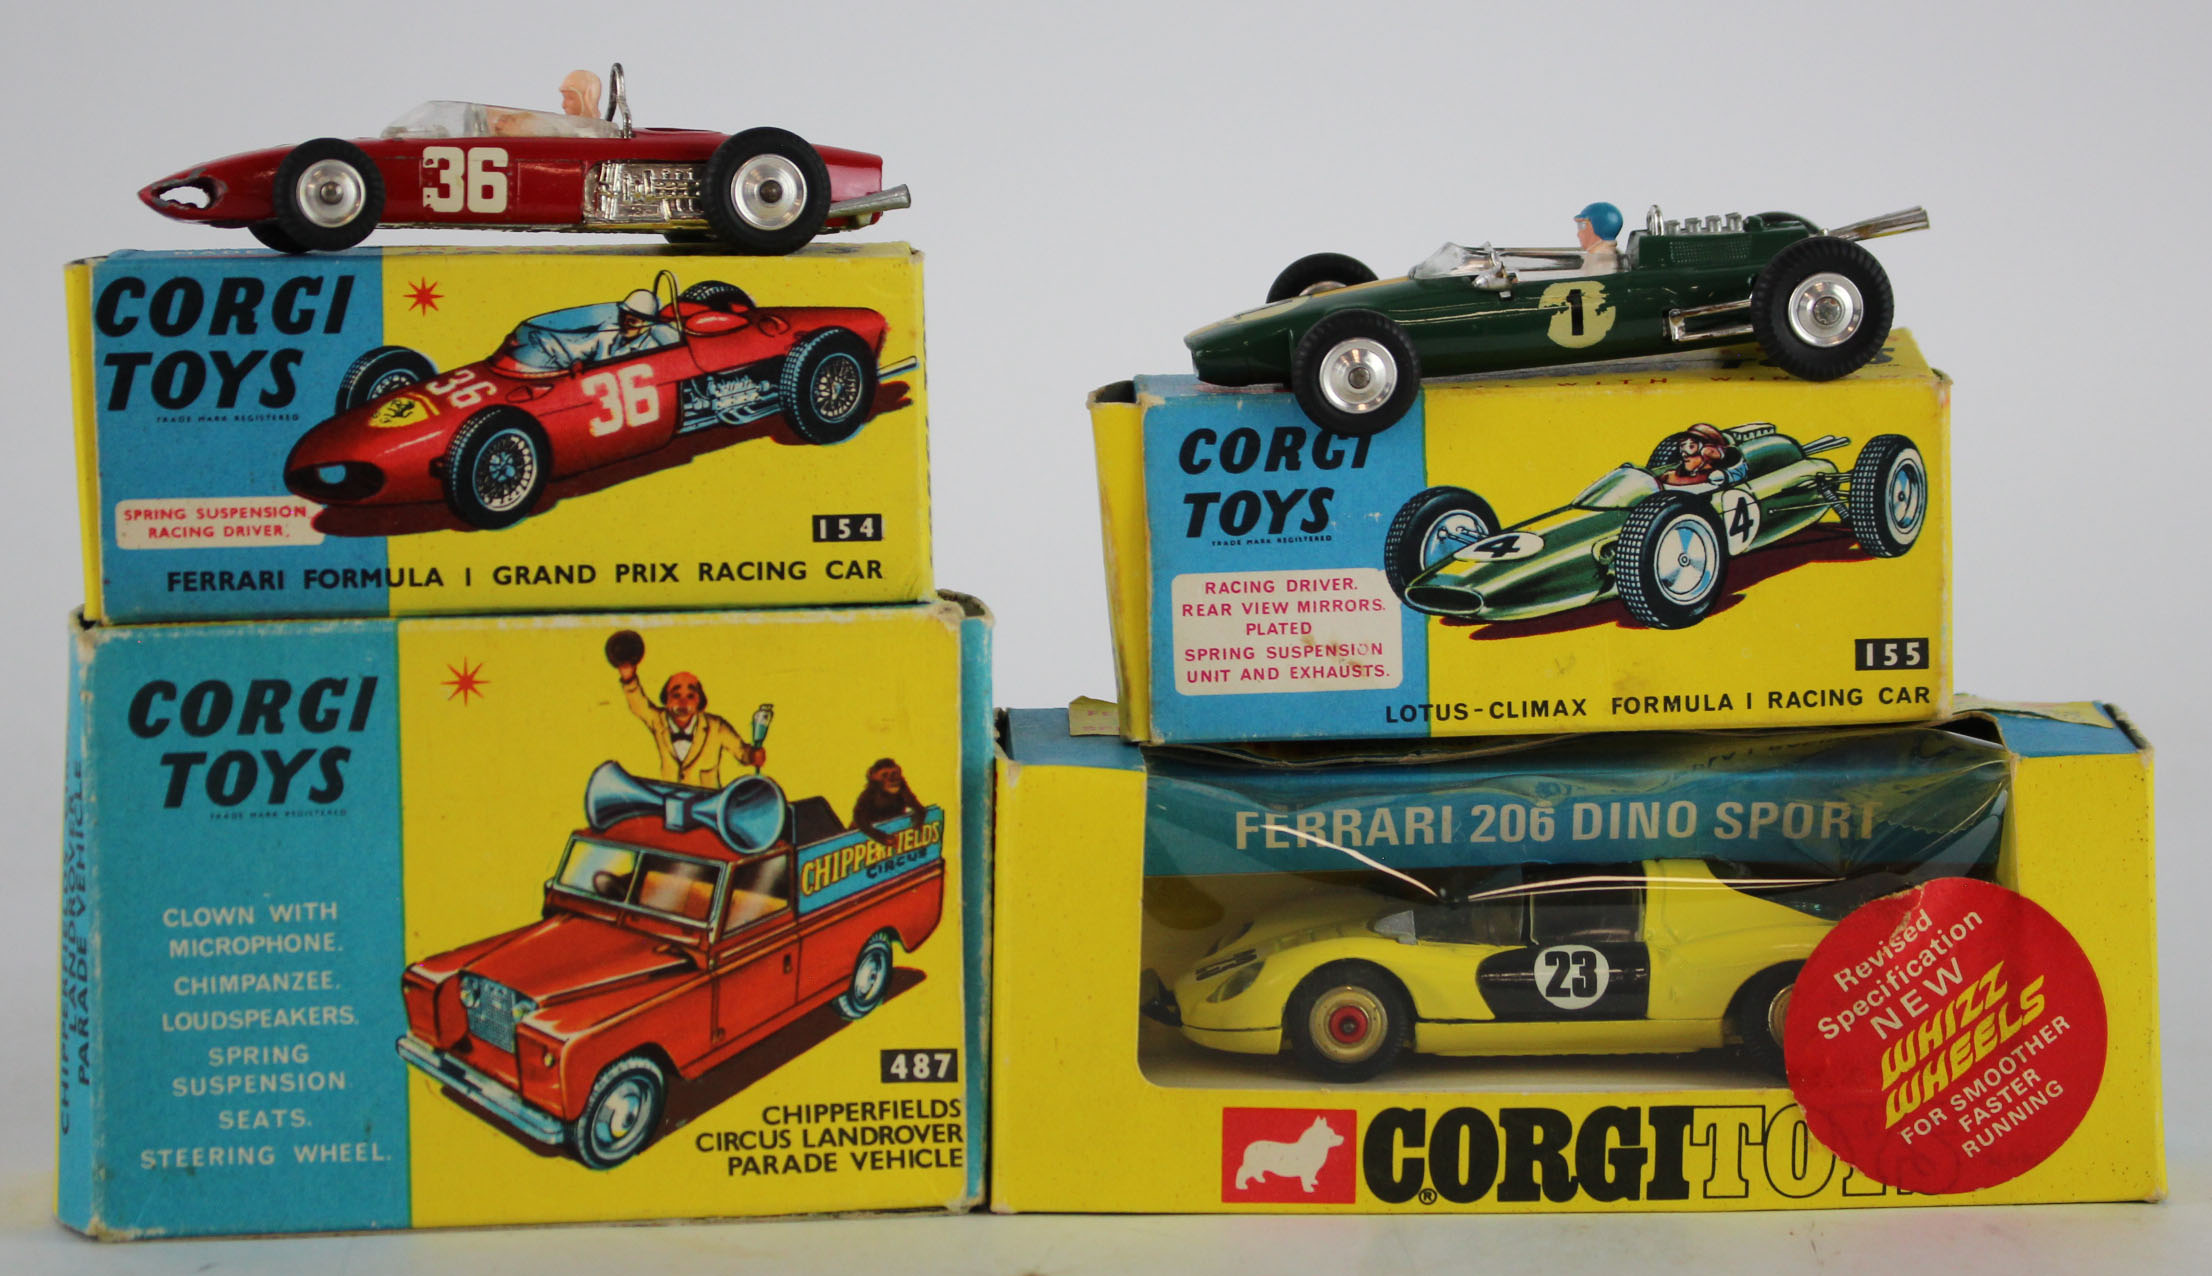 Corgi Toys. Four boxed Corgi models, comprising Chipperfields Circus Landrover Parade Vehicle (no.